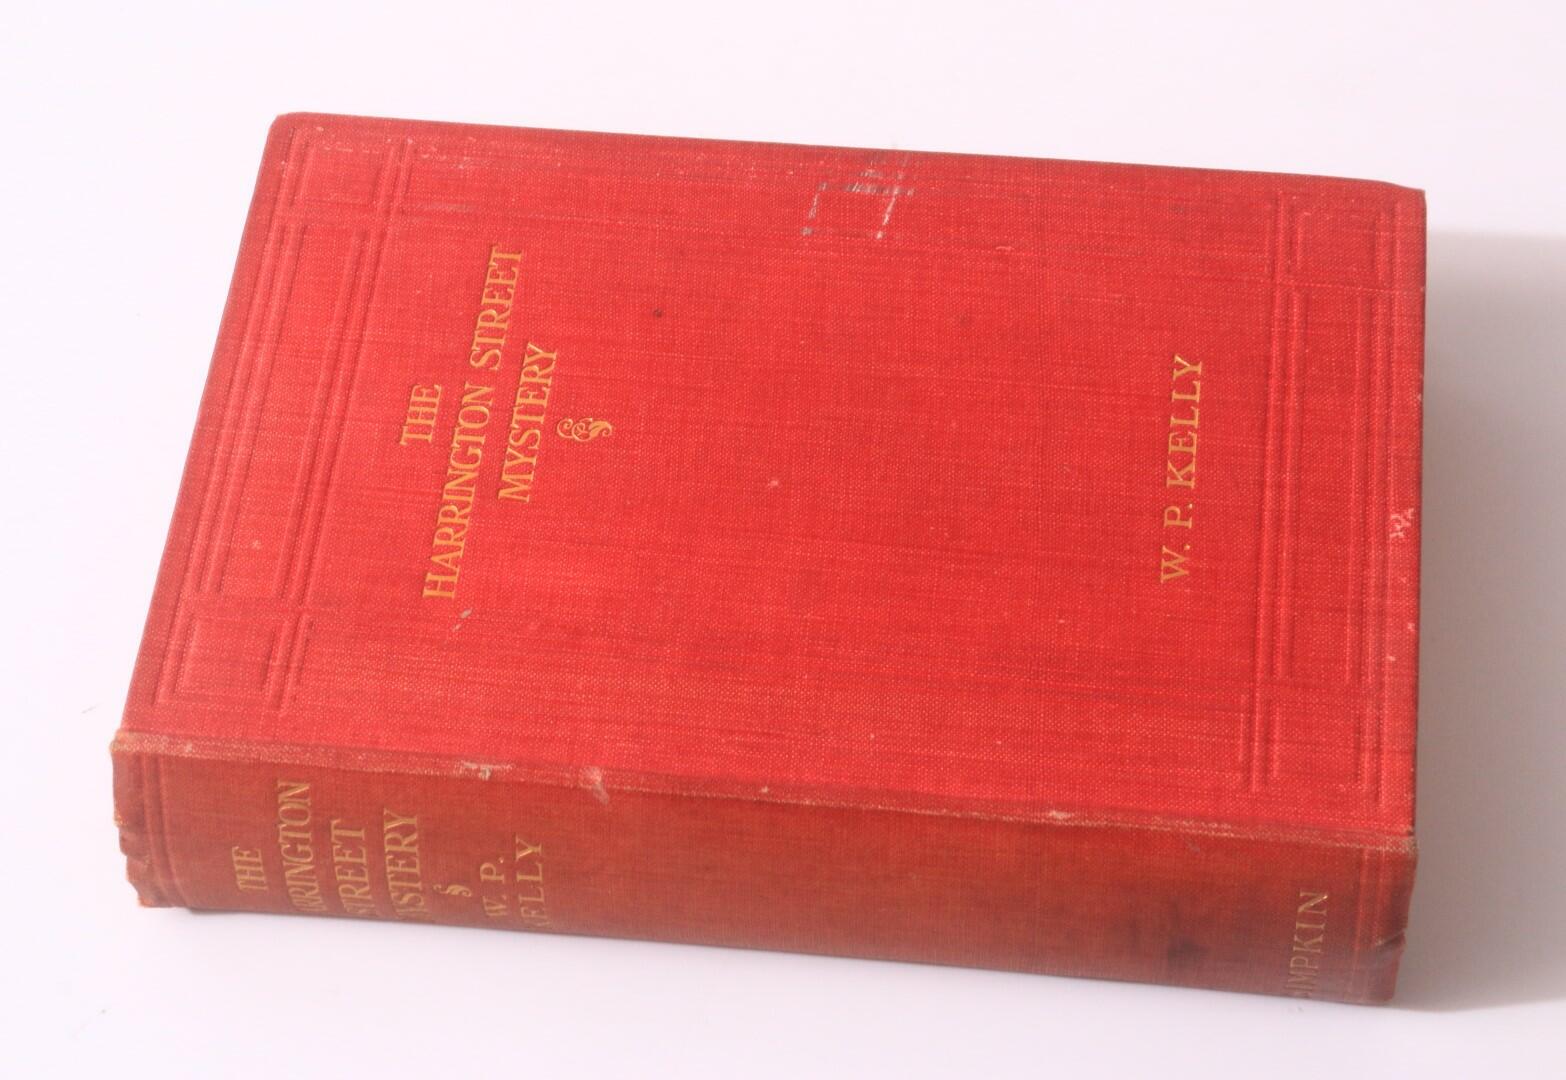 W.P.Kelly - The Harrington Street Mystery - Simpkin, Marshall, Hamilton, Kent & Co., 1915, First Edition.